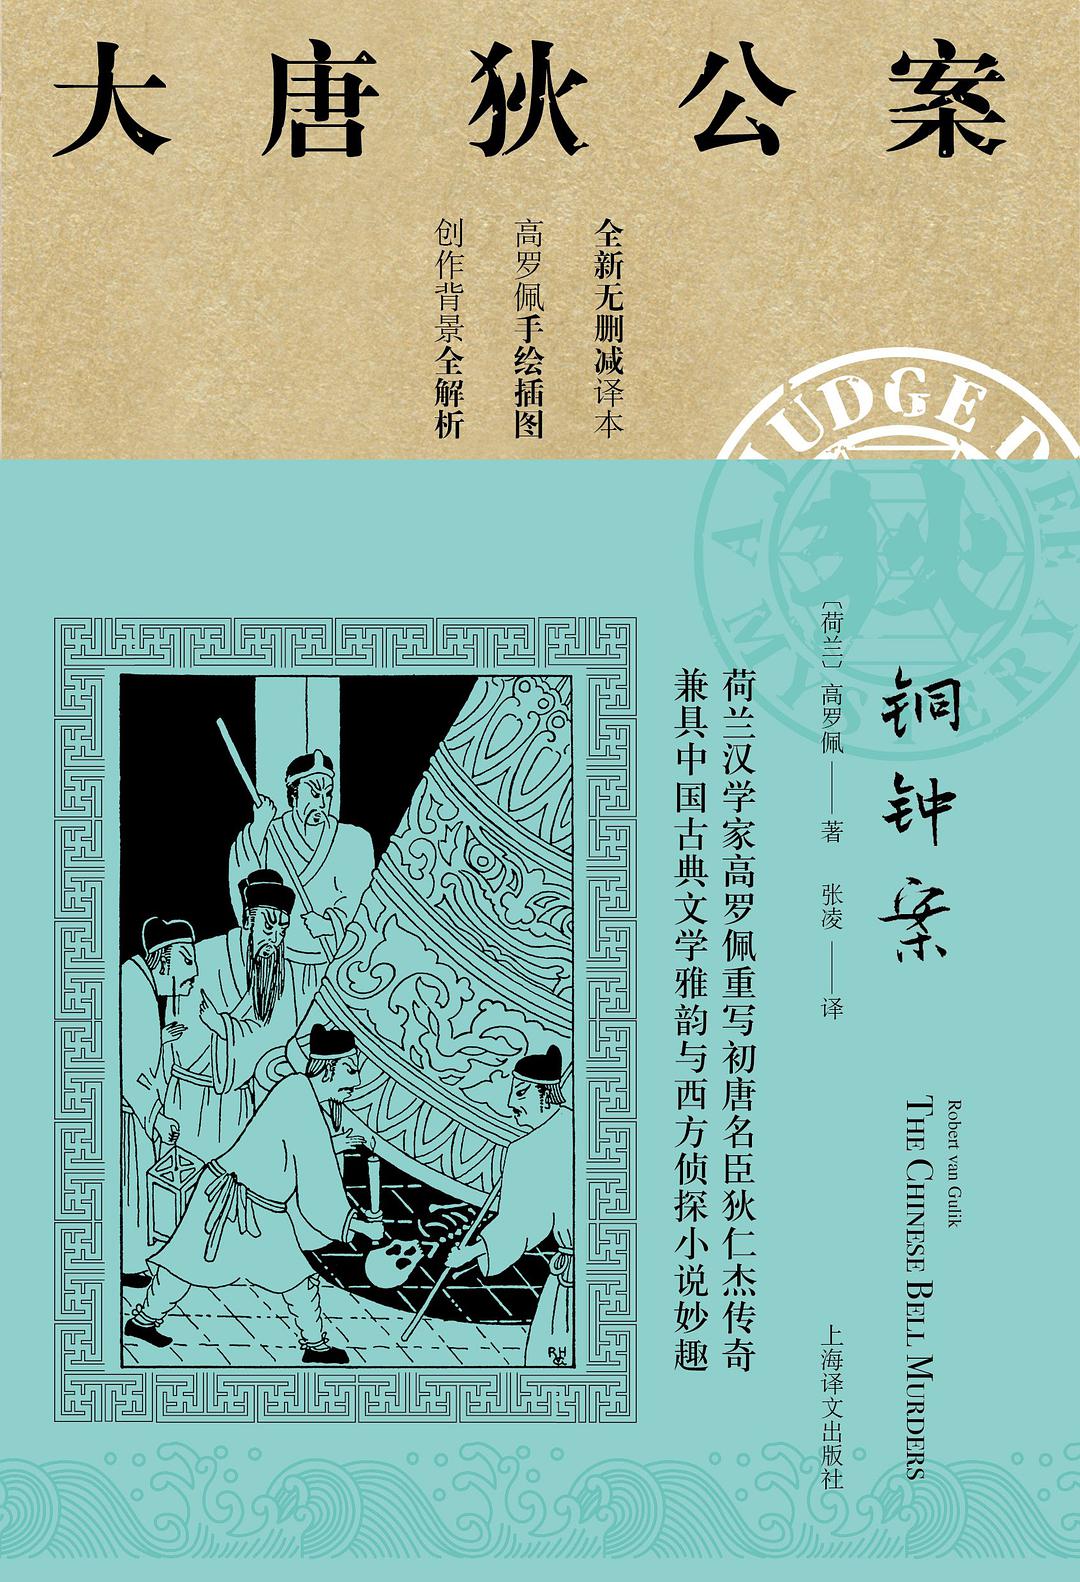 Robert van Gulik: 铜钟案 (Chinese language, 2019, 上海译文出版社)